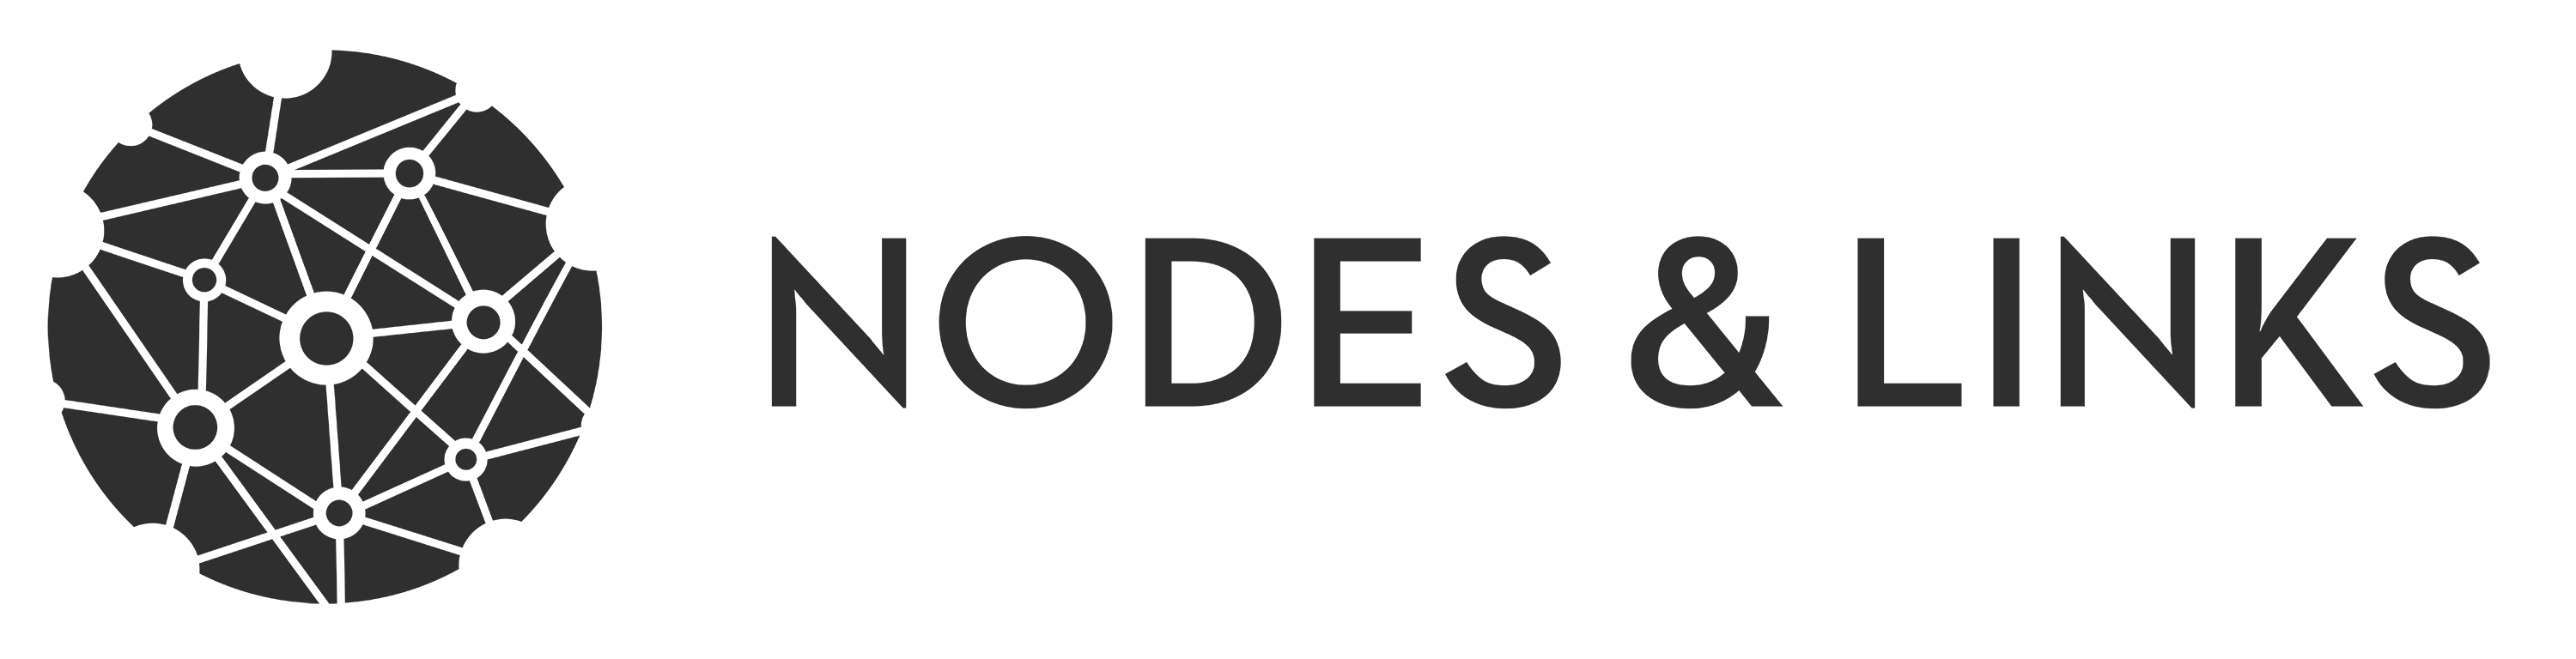 Nodes & Links logo